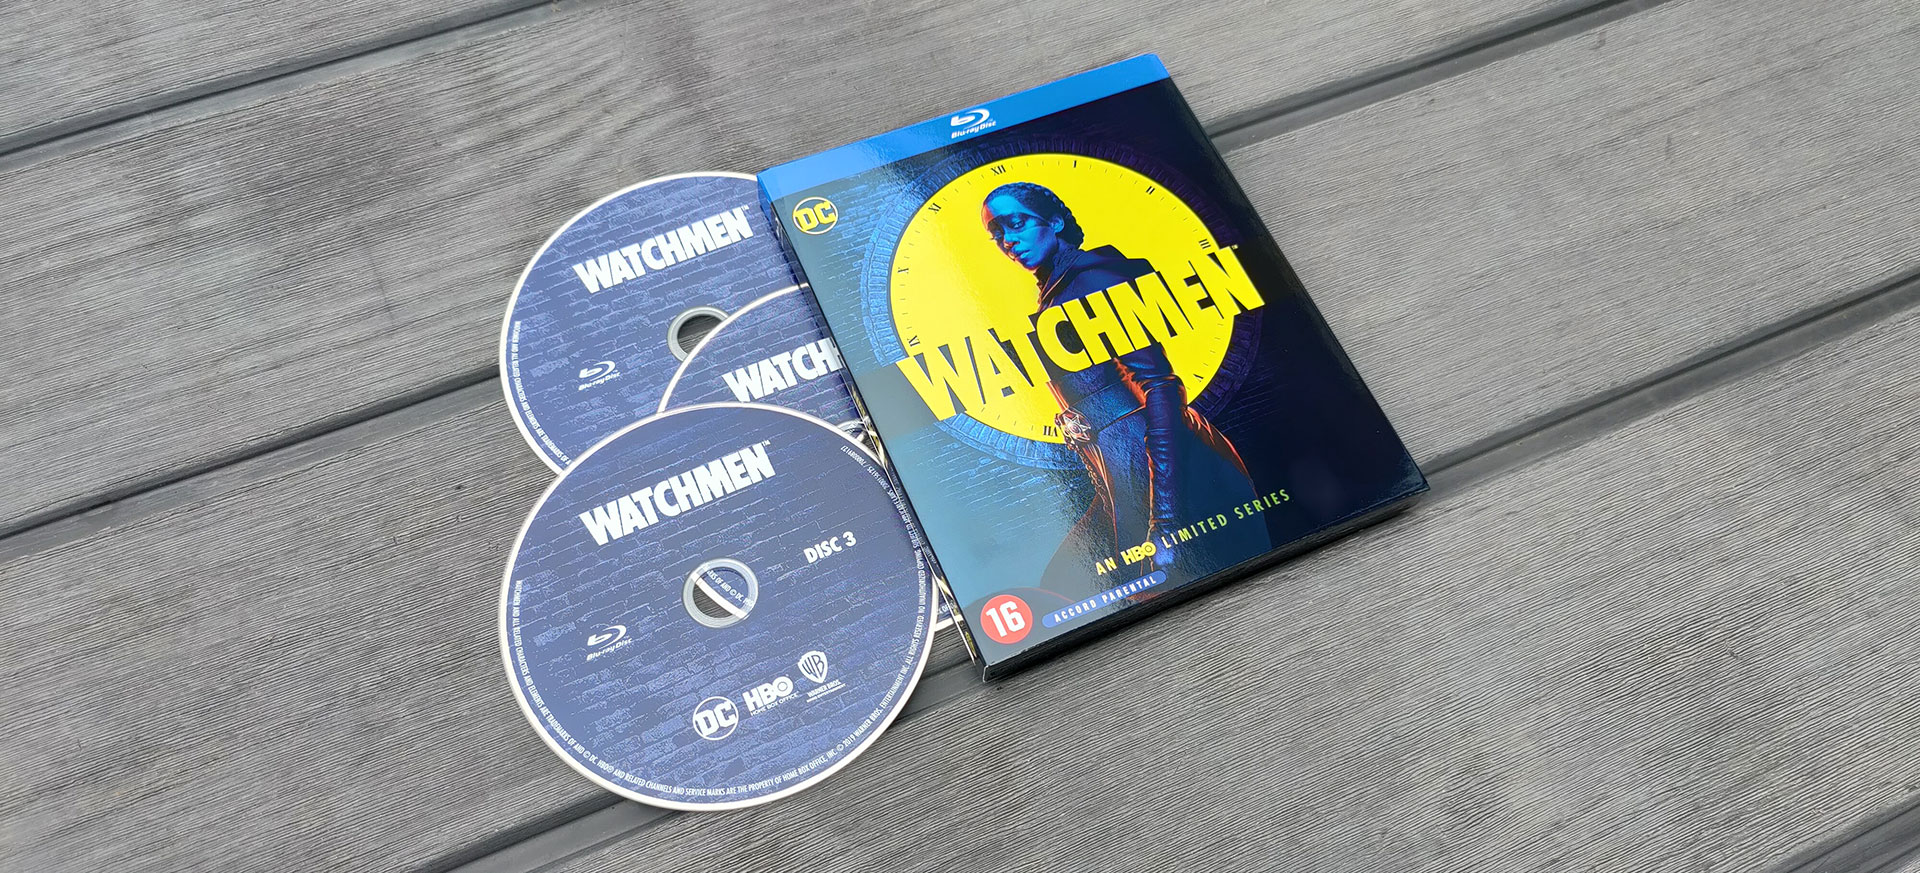 watchmen Seizoen 1 op Blu-Ray